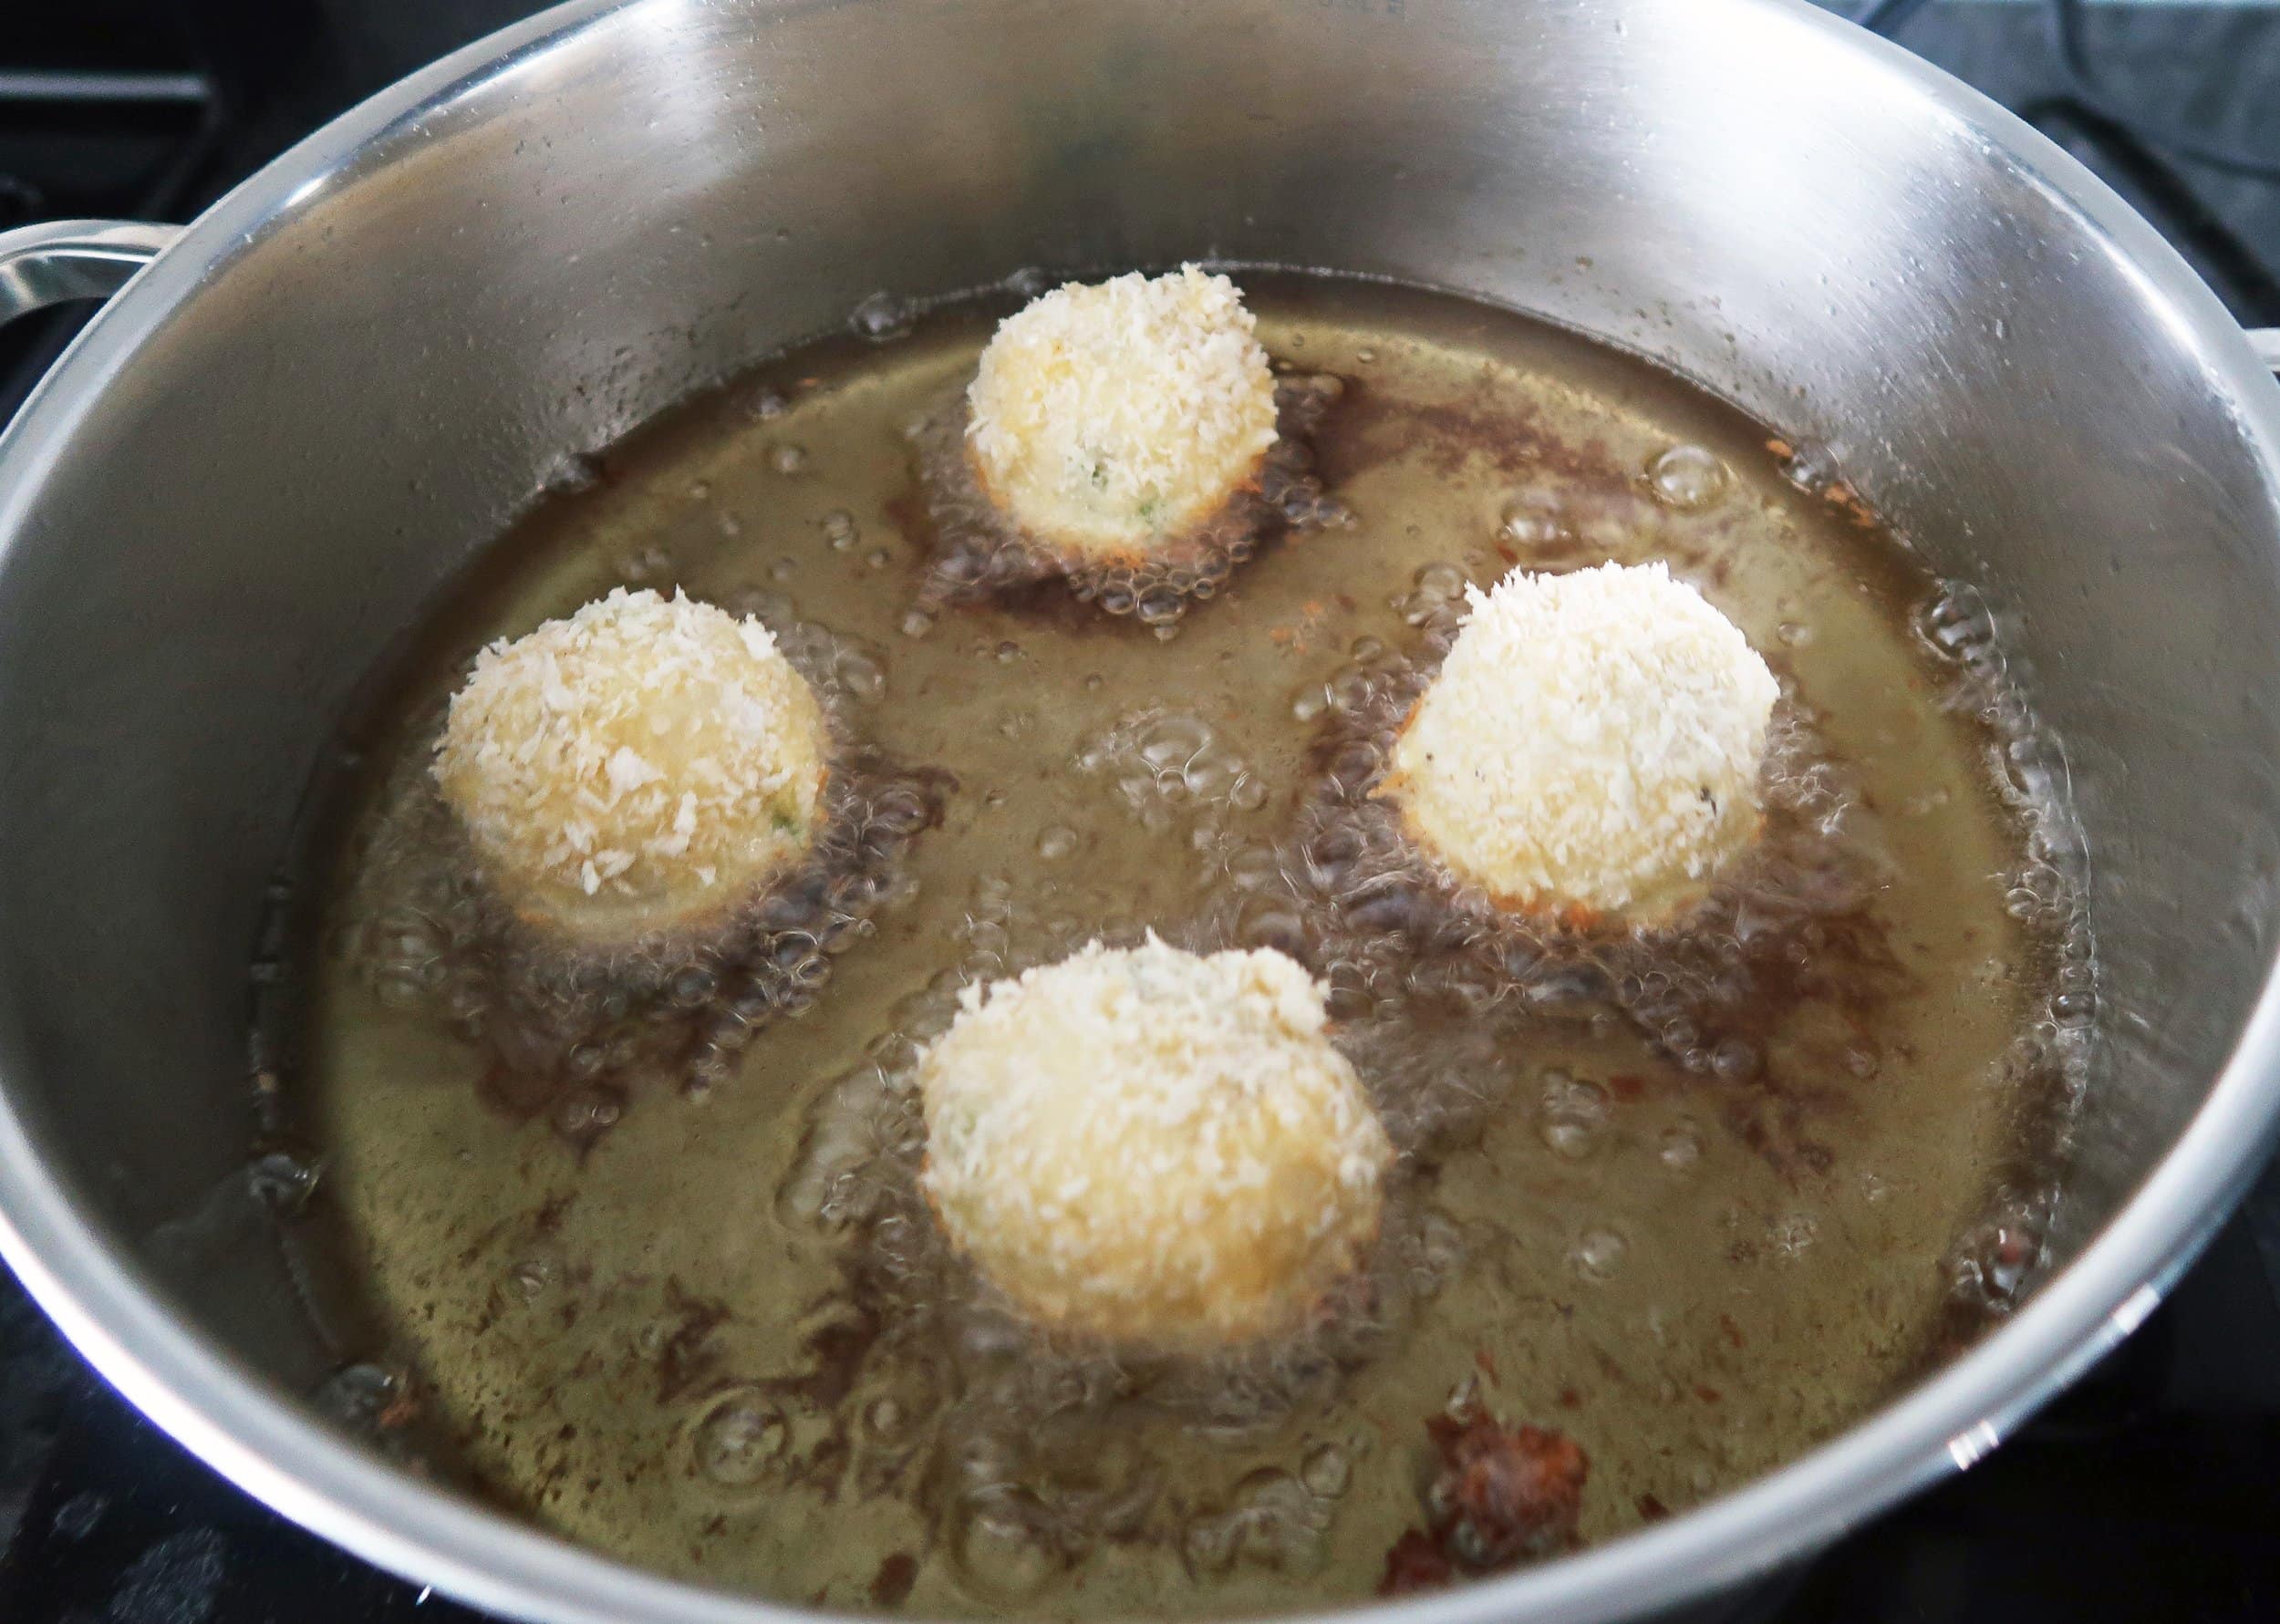 Four potato balls frying in a pot of oil.